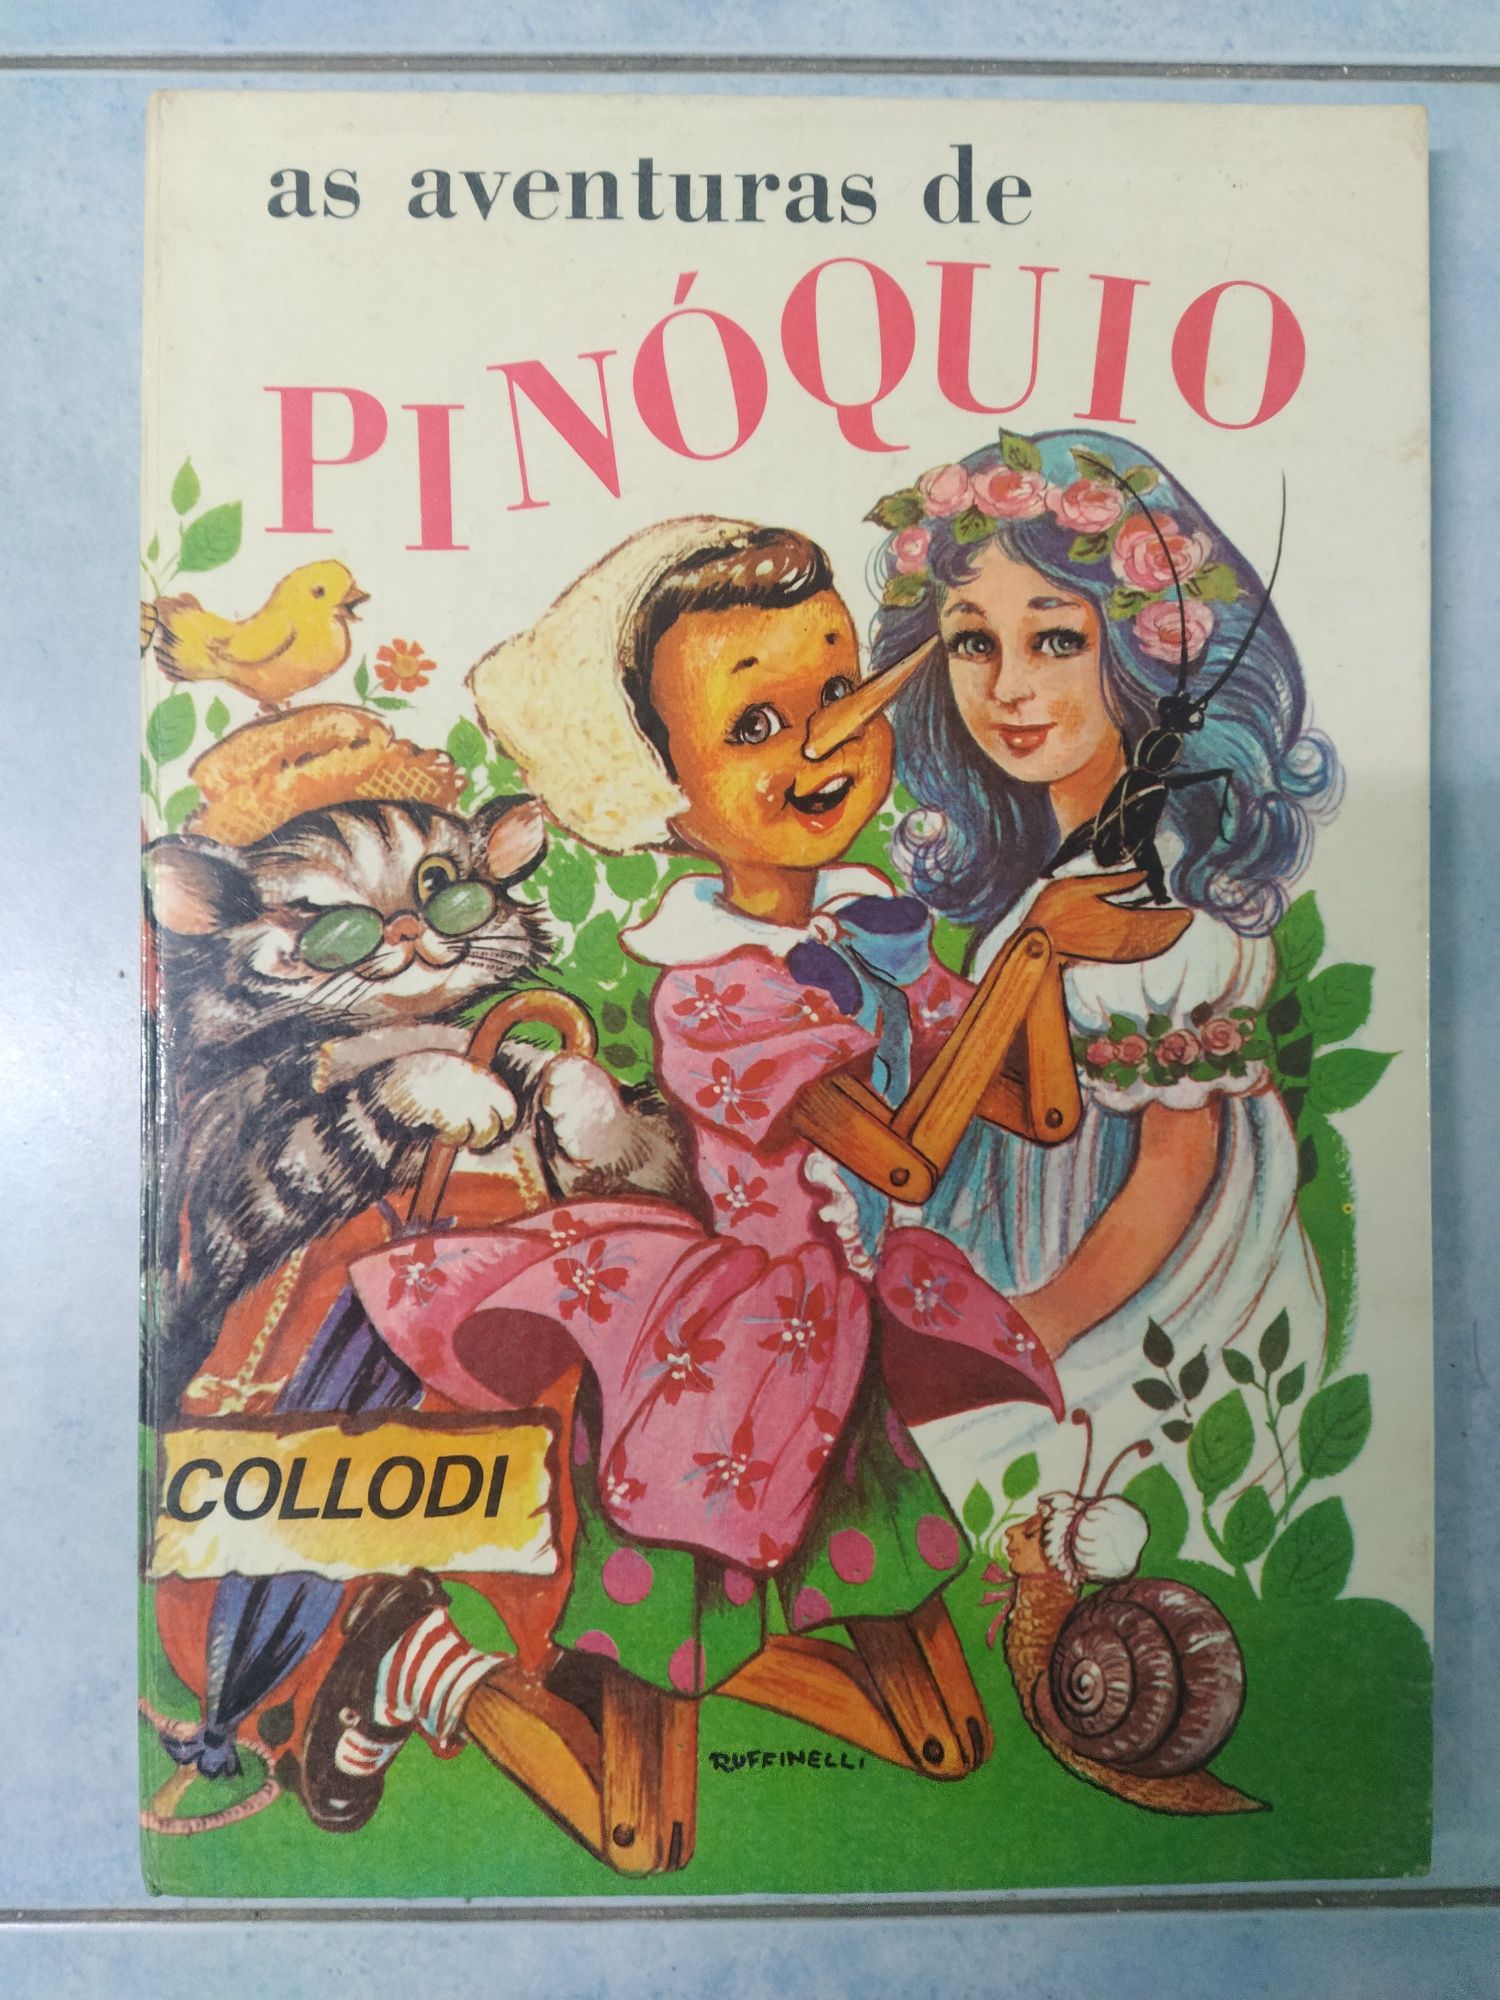 Livro antigo "As aventuras de Pinóquio"